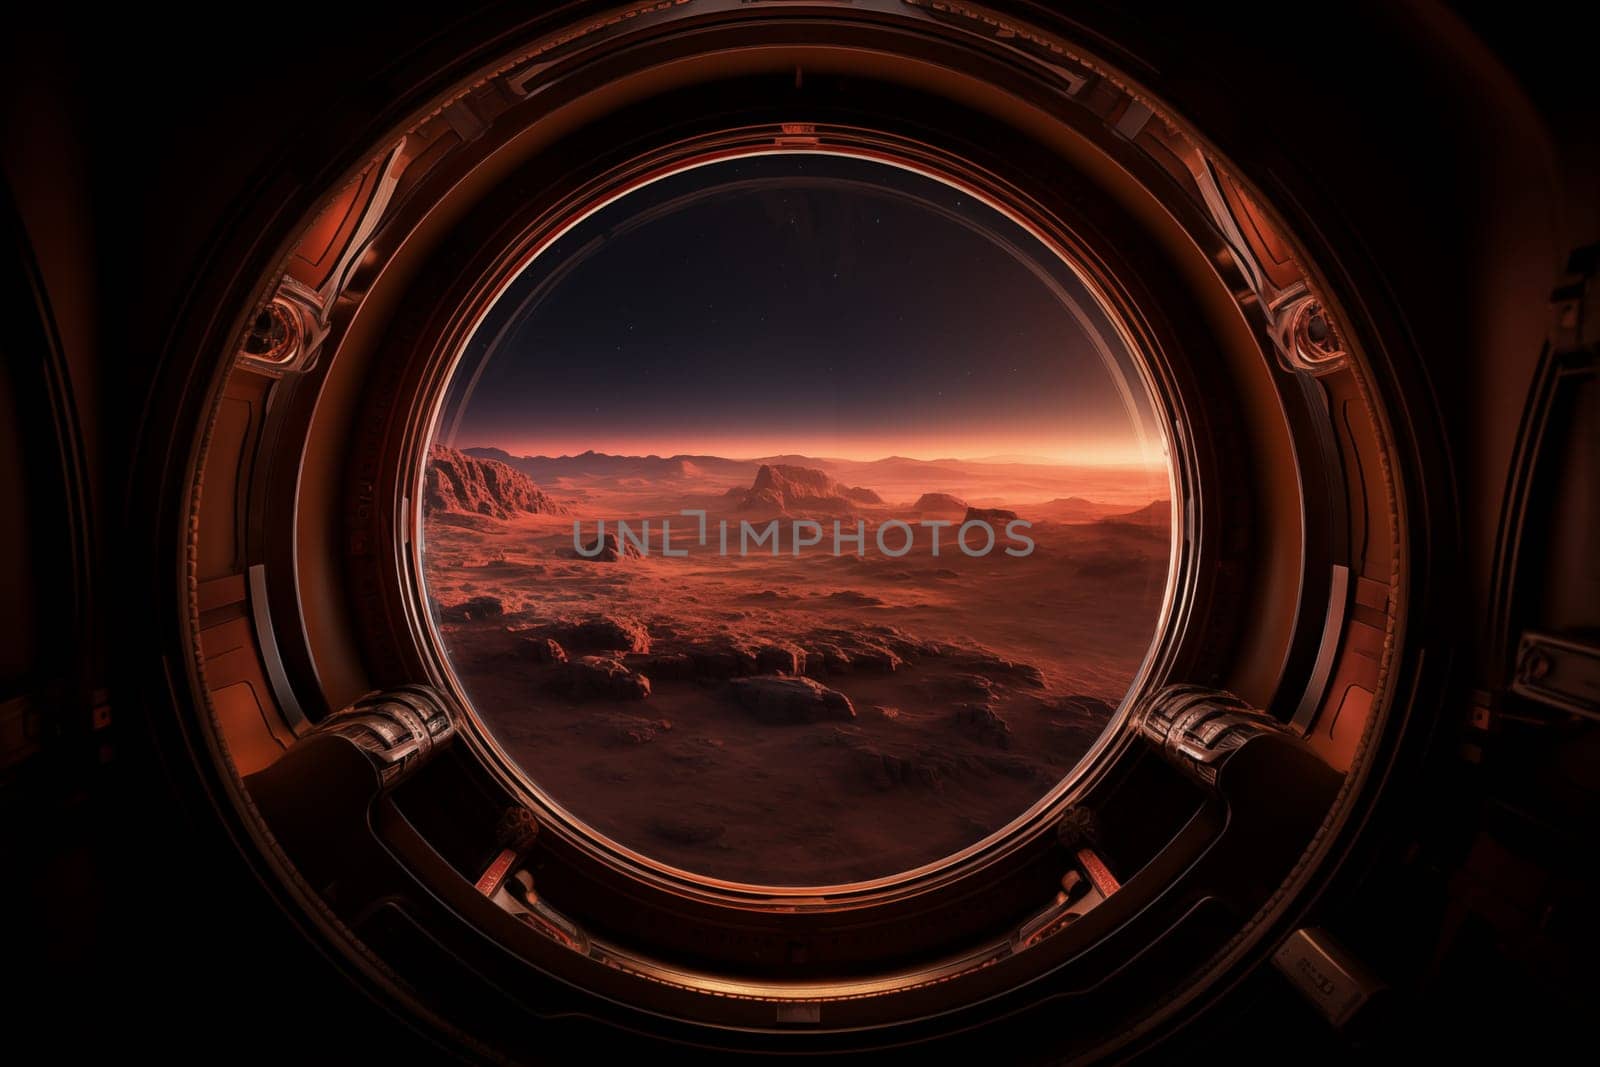 Mars landscape seen through spaceship window illuminator. Concept of extraterrestrial journey space exploration, conveys sense of otherworldly beauty and wonder